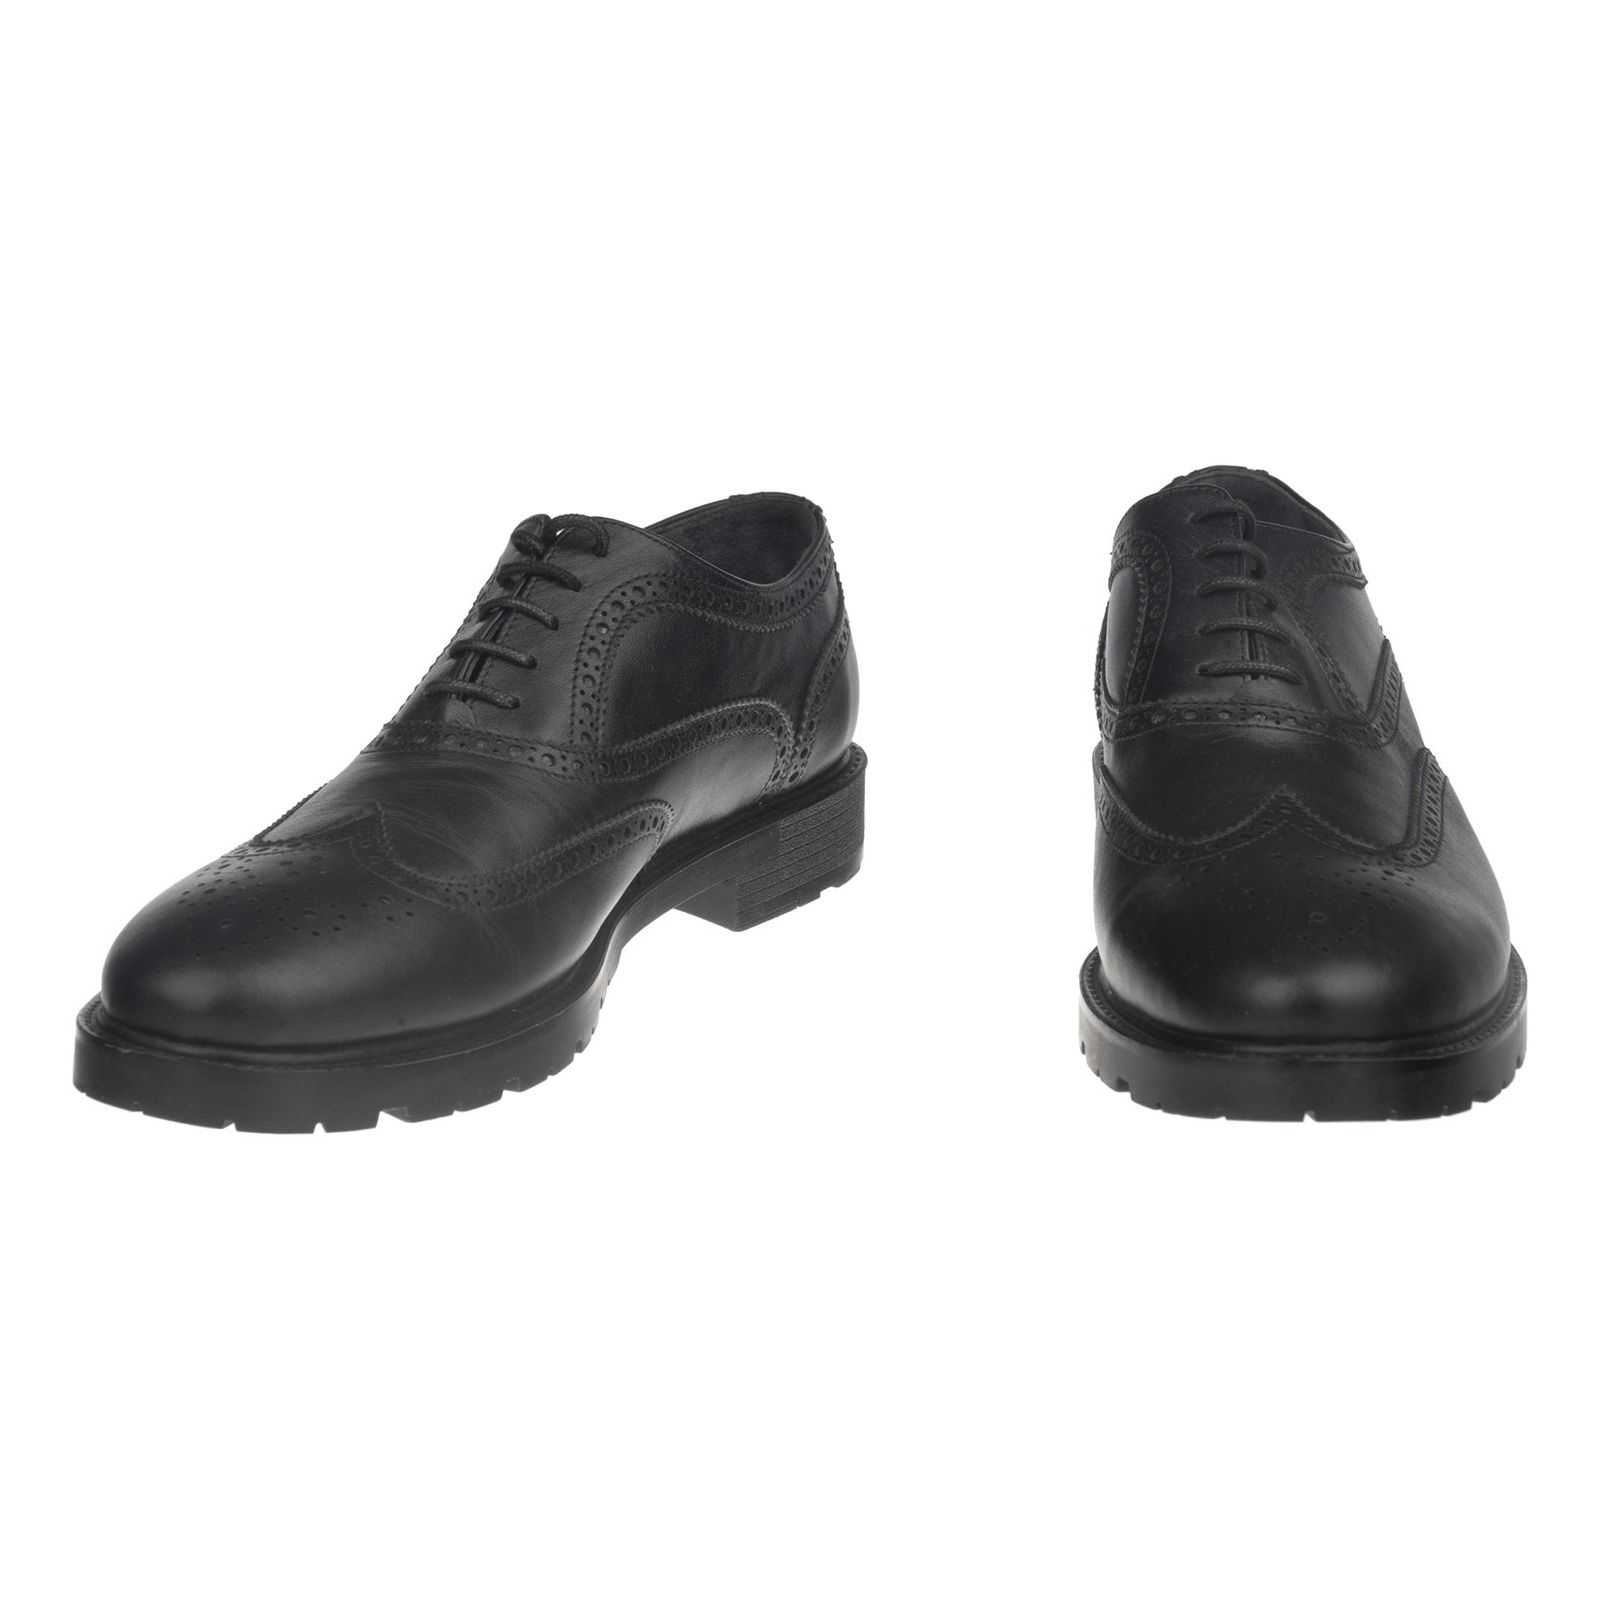 کفش مردانه بلوط مدل 7174A503-101 - مشکی - 4